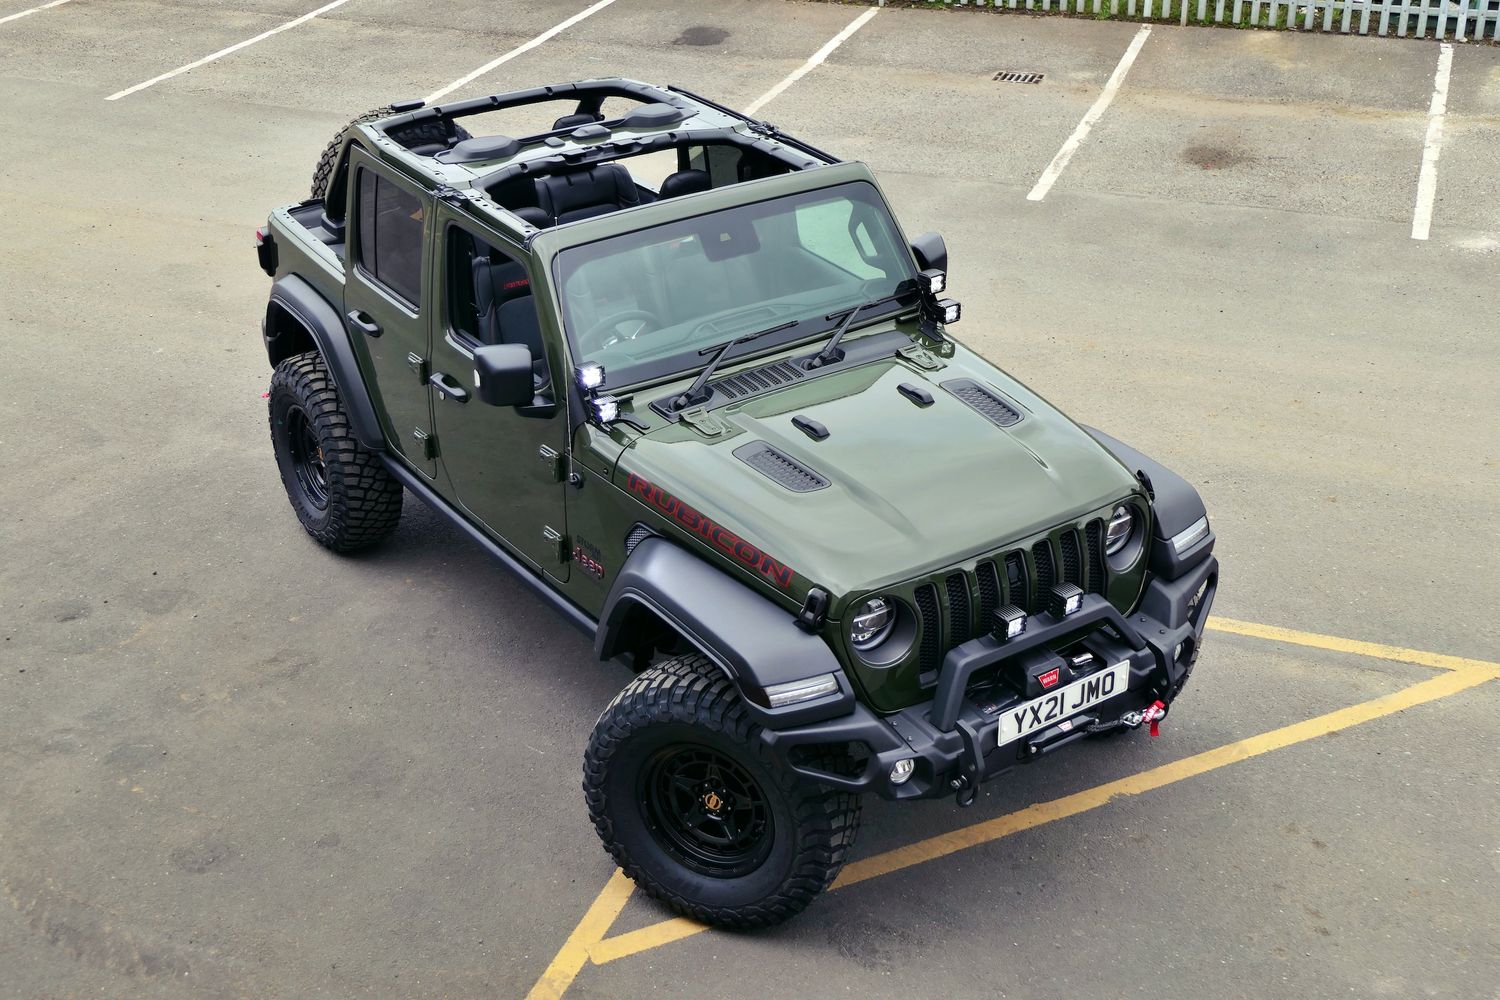 2021 Jeep Wrangler JLU - RKMT Smoaking Yeti